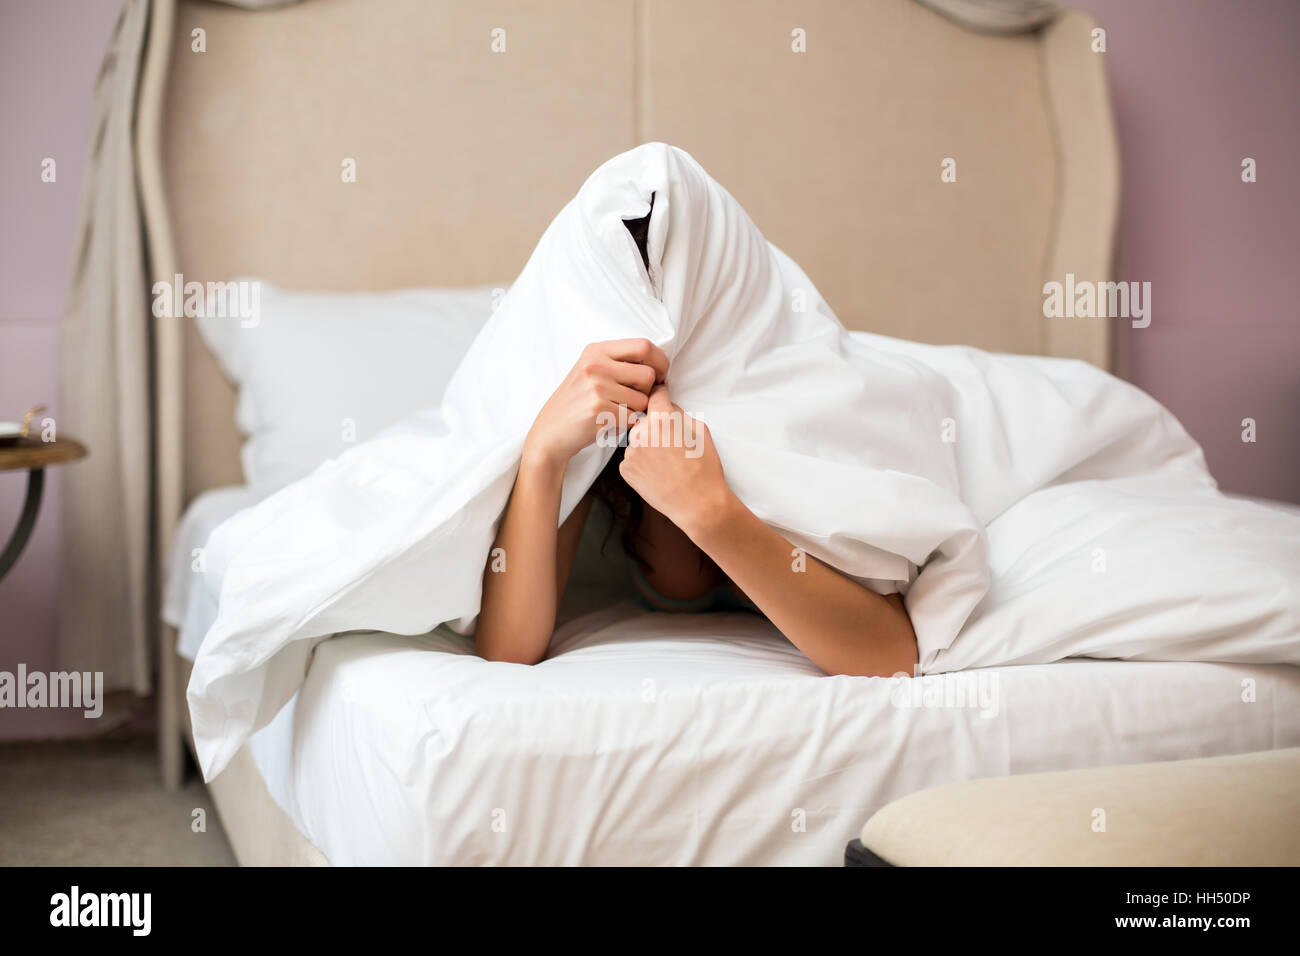 Woman hiding under a blanket. Stock Photo